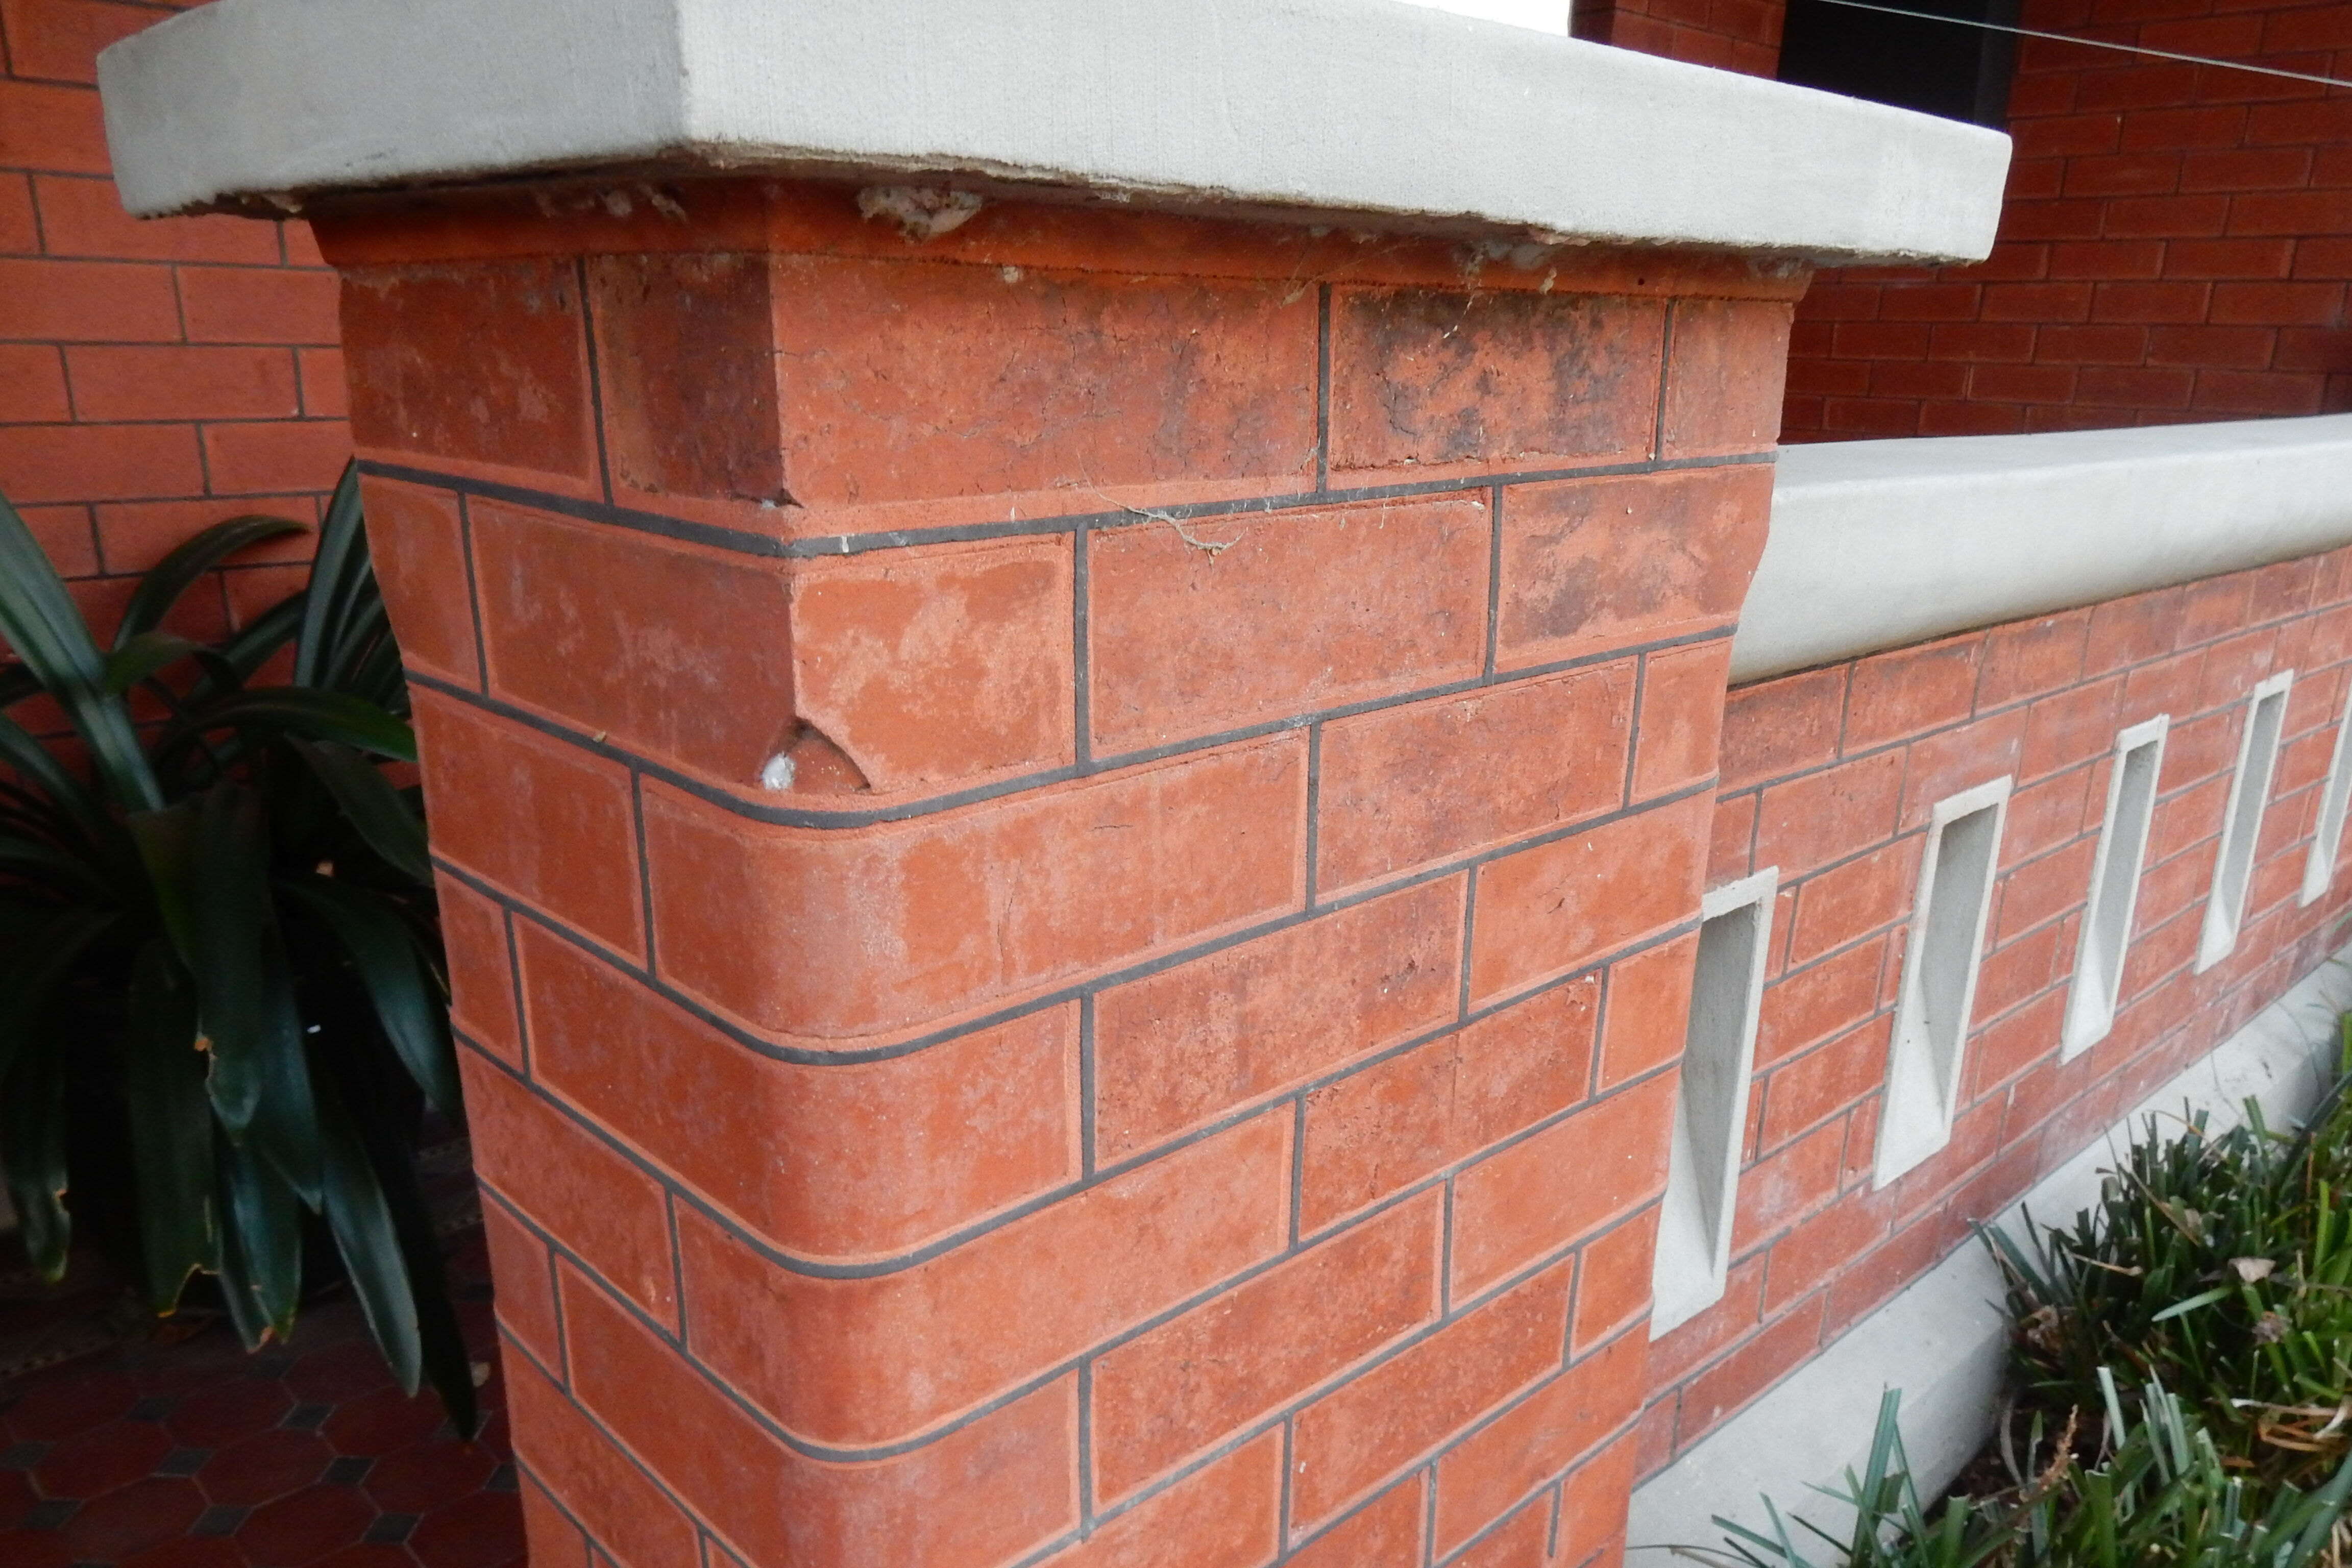 Restoration on building Facades and Brickwork